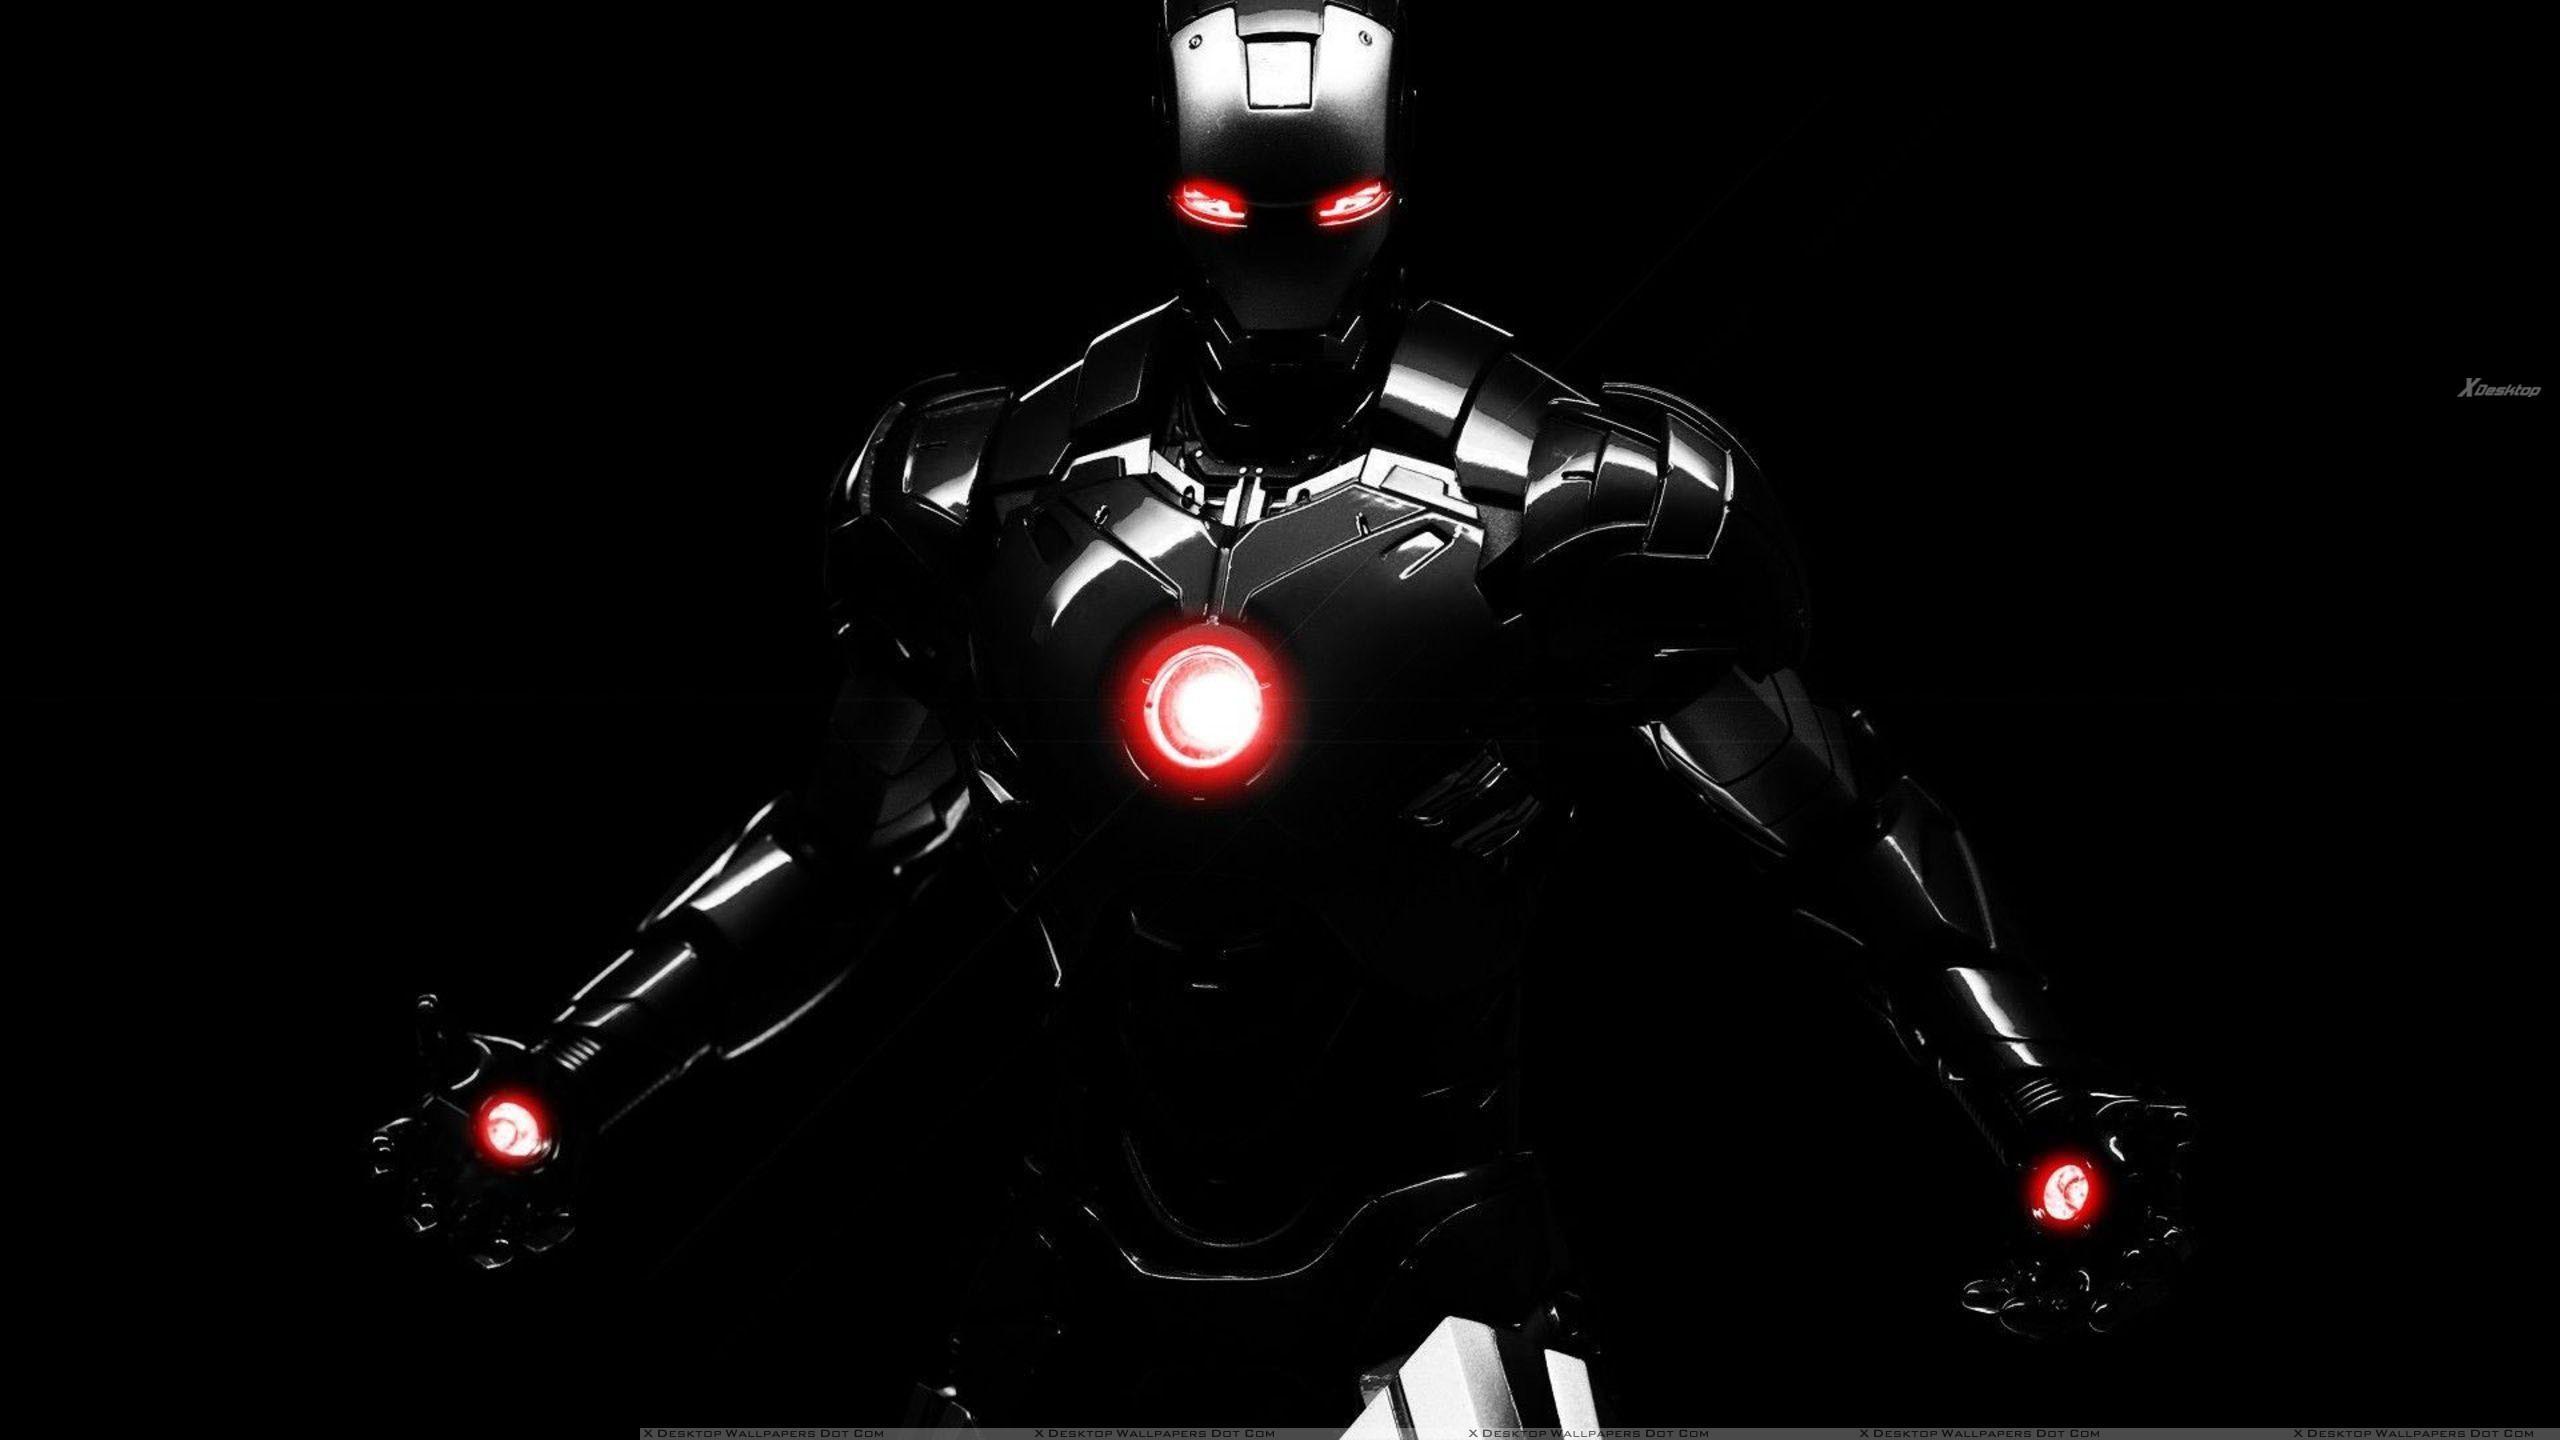 Iron Man 3 Wallpaper, Photo & Image in HD